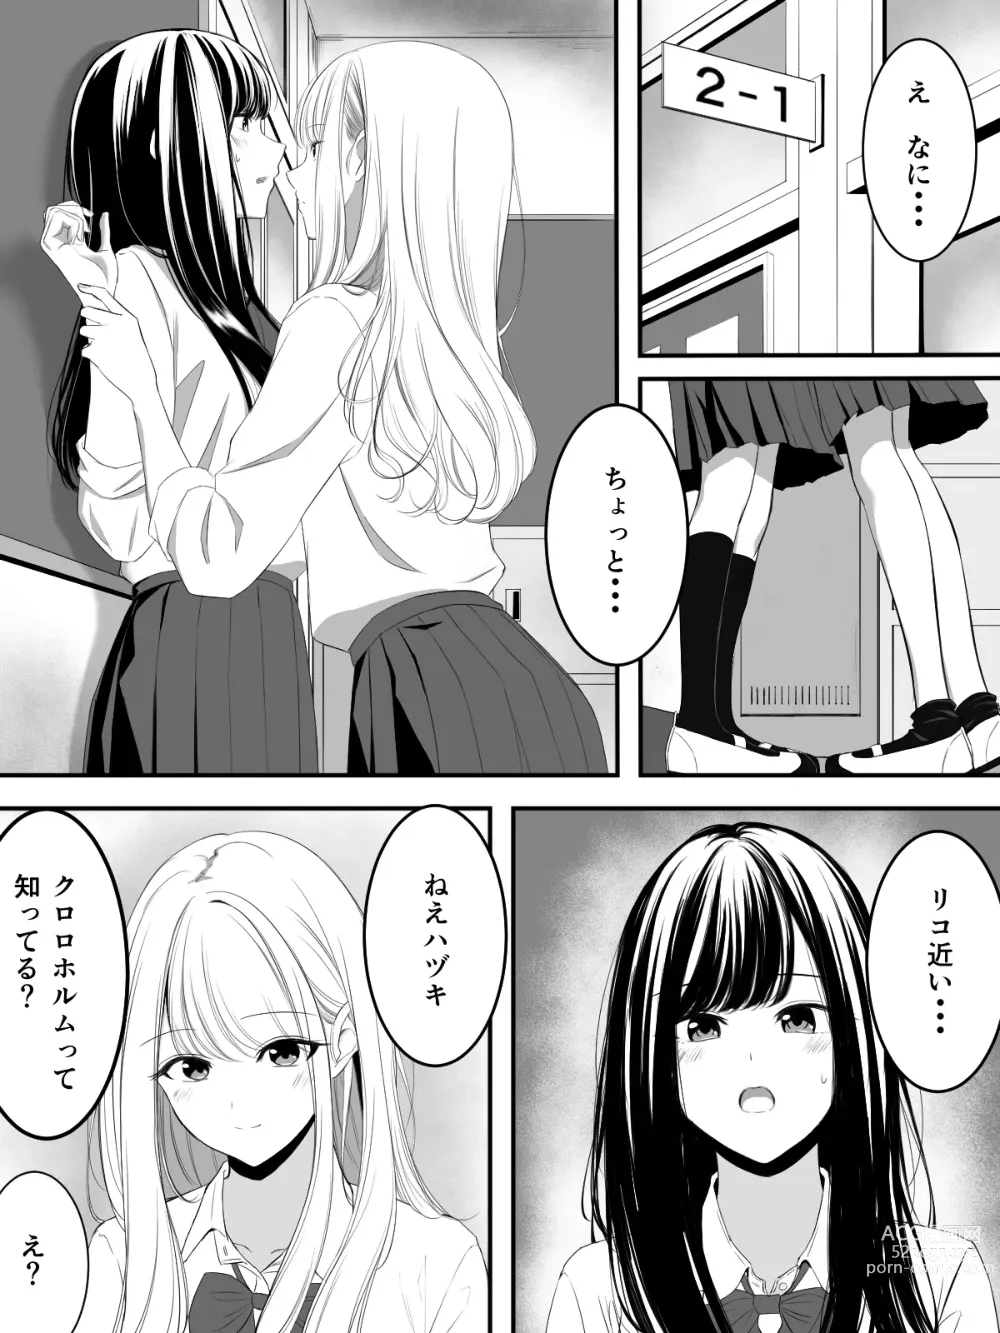 Page 11 of doujinshi Yuri comic Part 1,2 and 3.